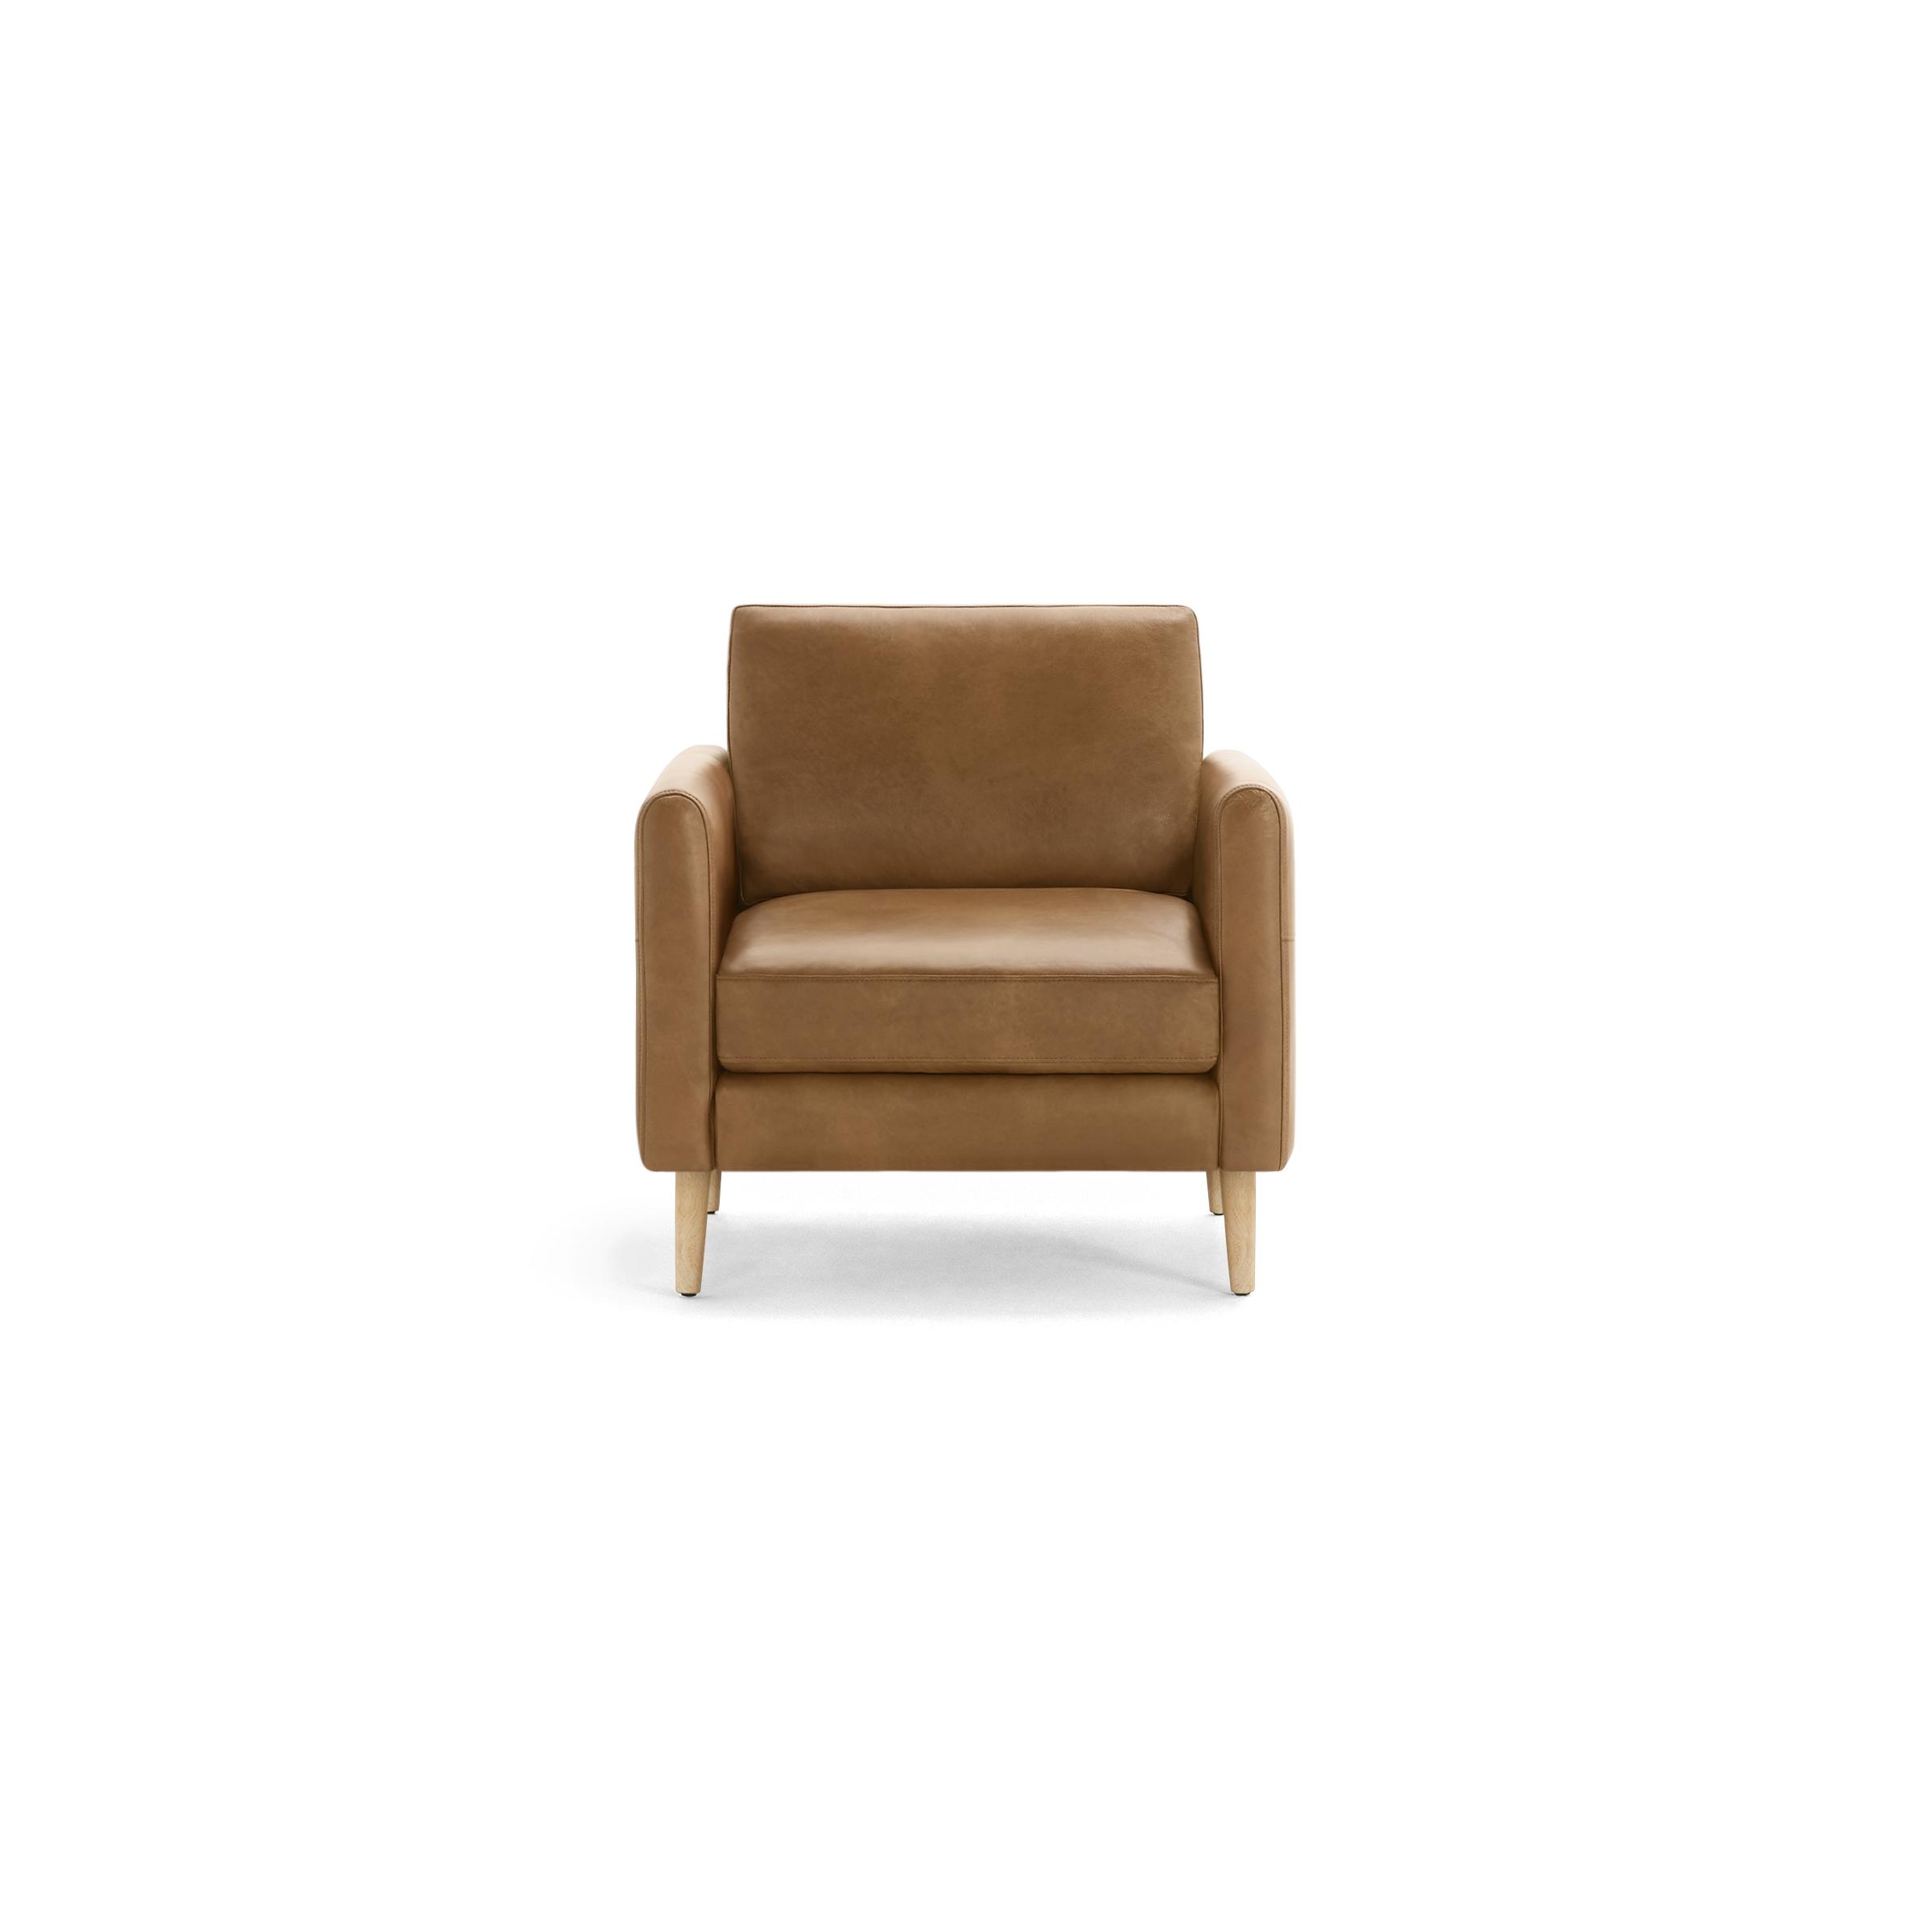 Nomad Leather Club Chair in Camel, Oak Legs, Leg Finish: OakLegs - Image 0